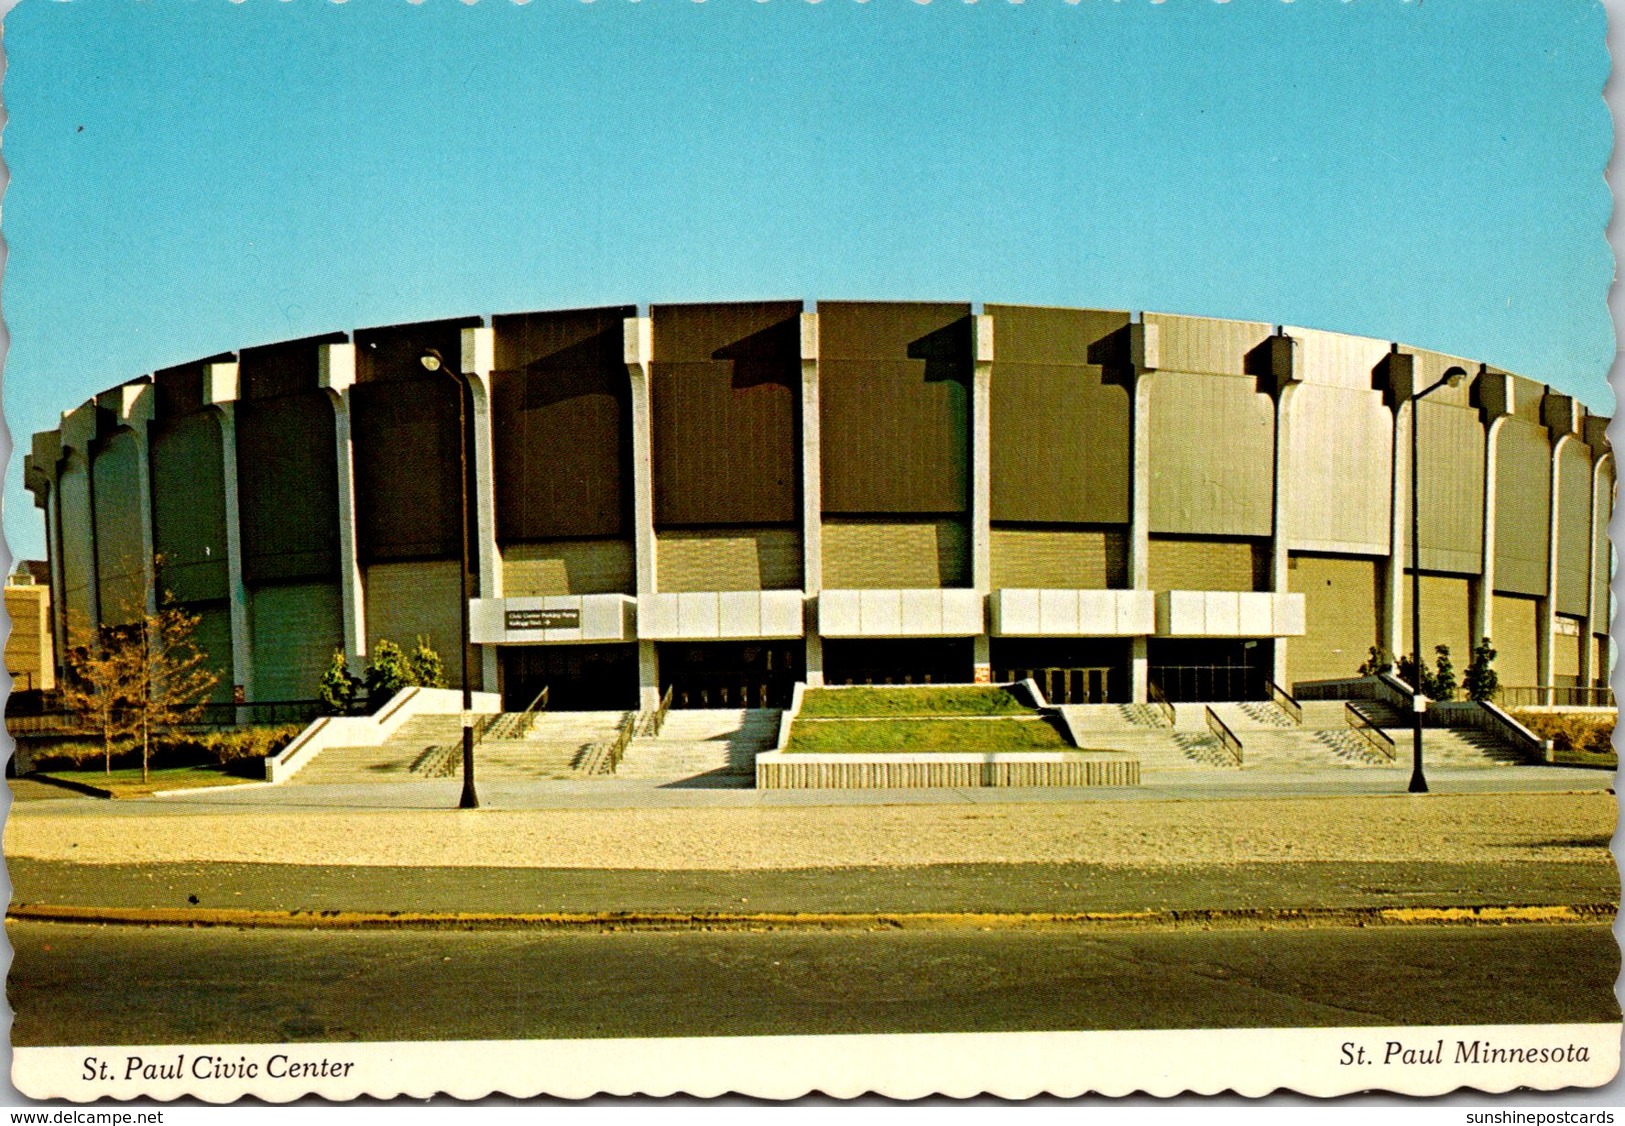 Minnesota St Paul Civic Center - St Paul